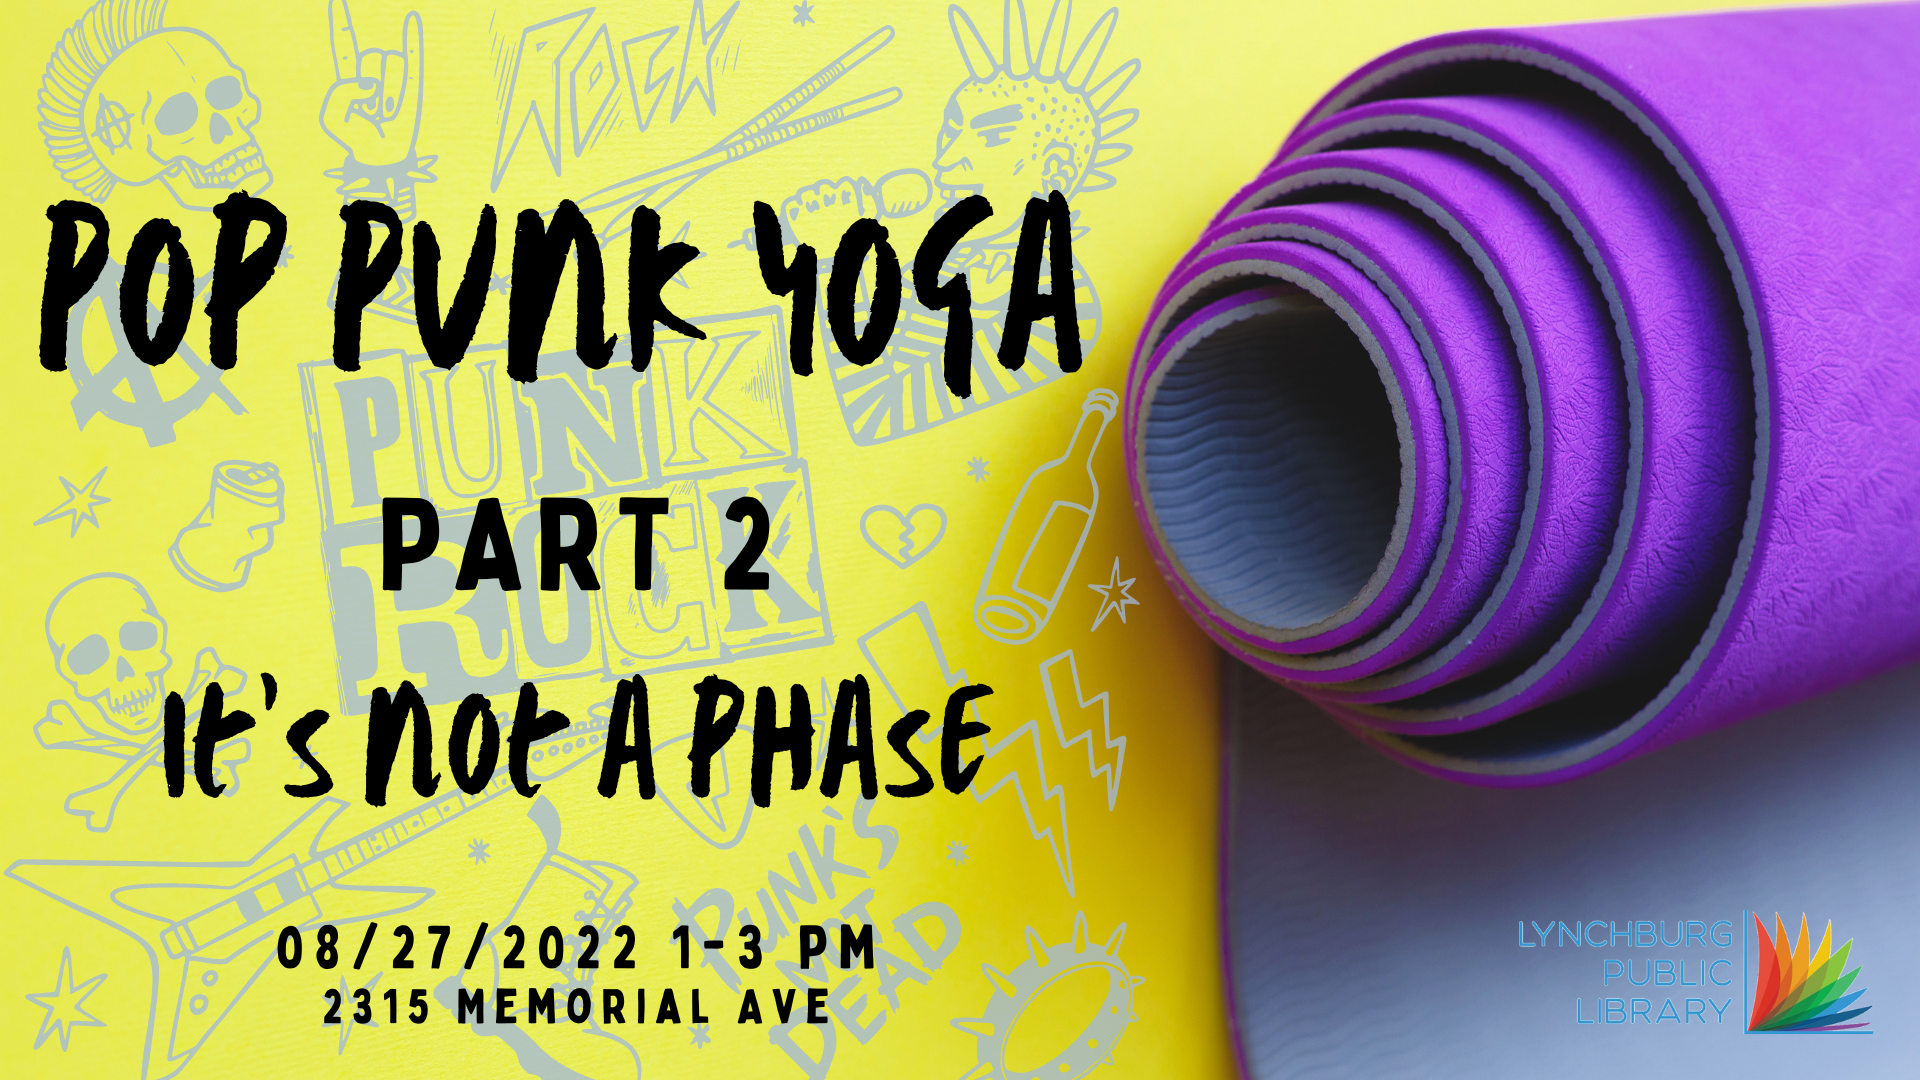 Pop Punk Yoga Part 2, It's not a phase, 08/27/2022 1-3 pm, 2315 Memorial Ave